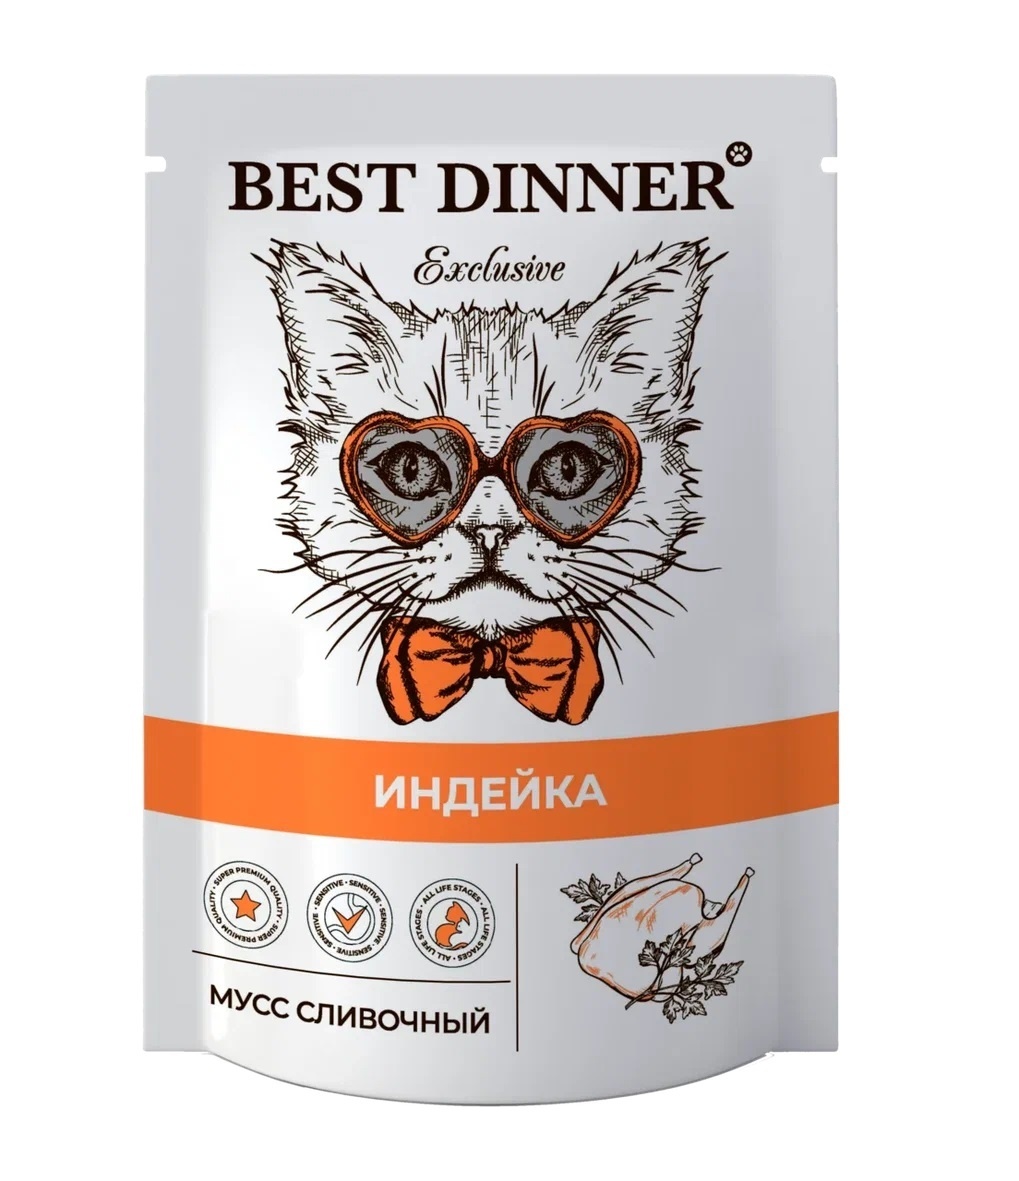 Best Dinner Best Dinner мусс сливочный для кошек, индейка (85 г)